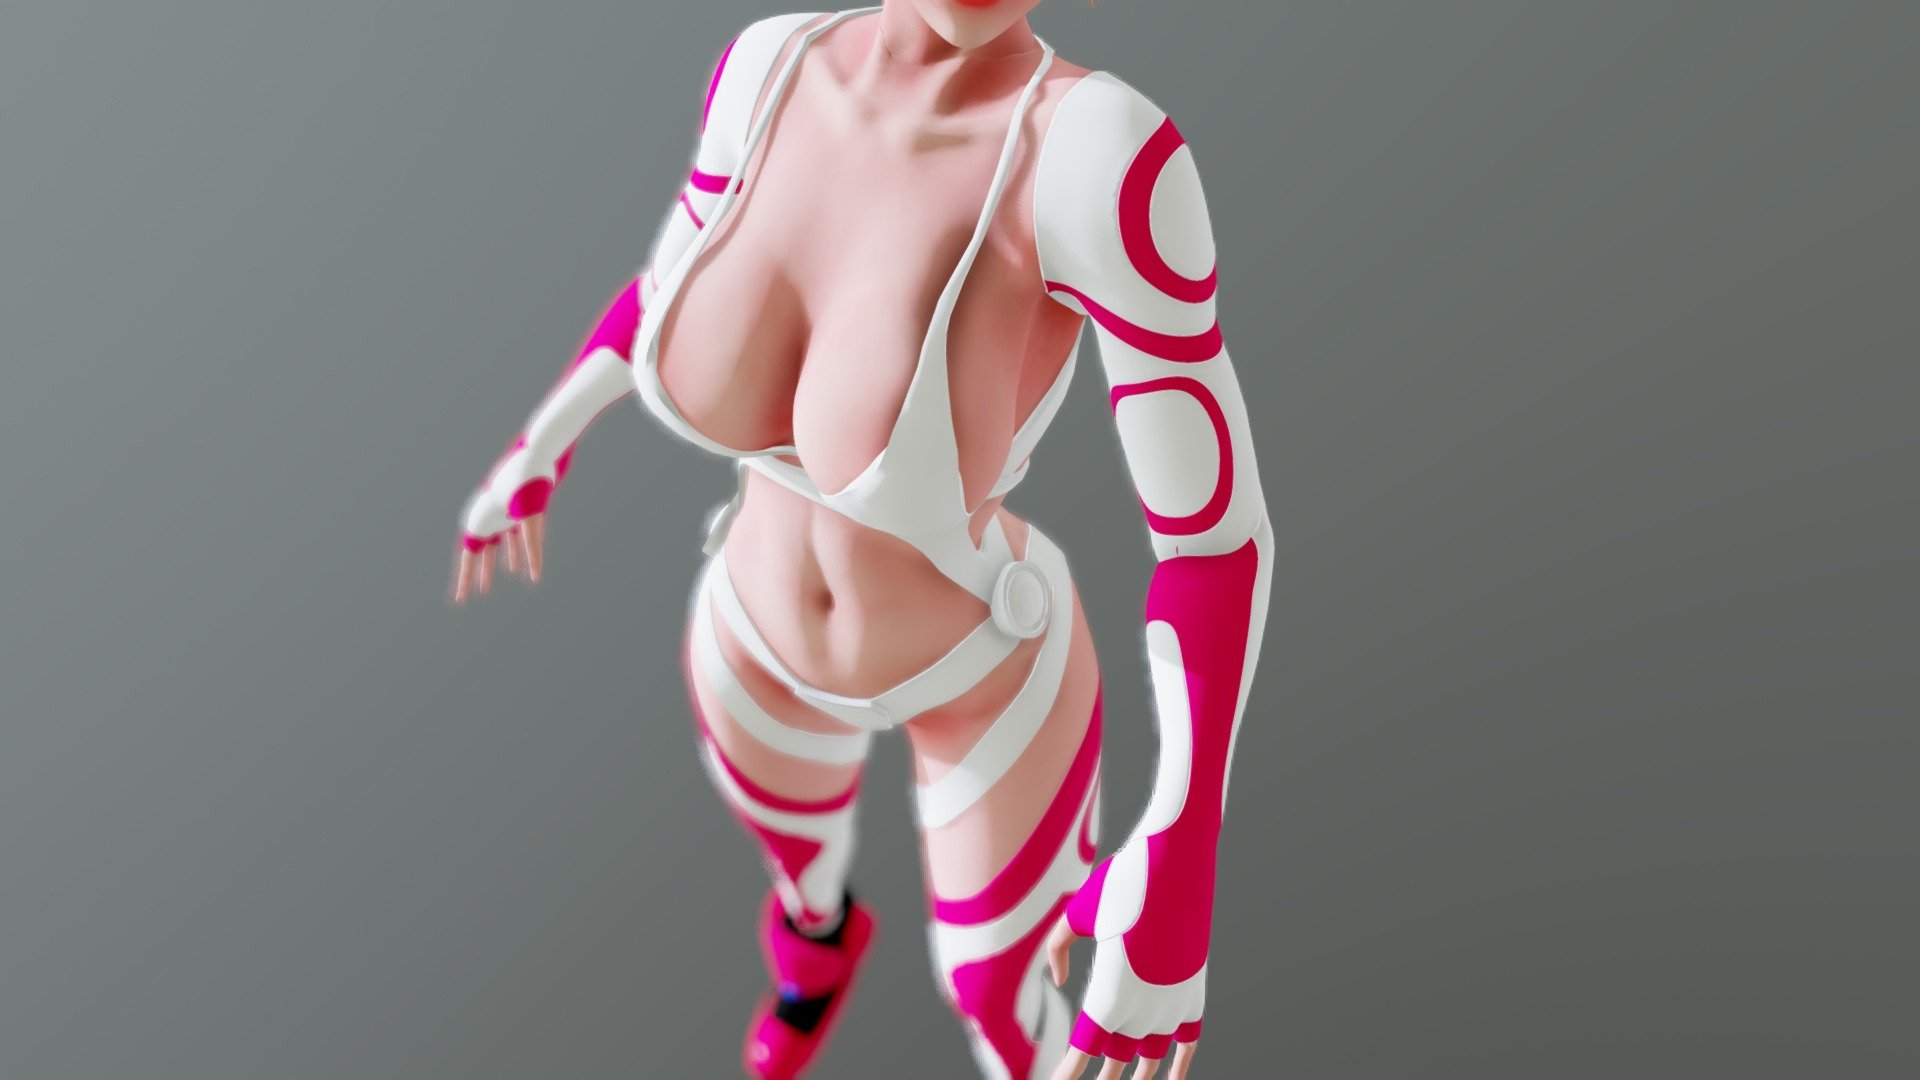 - 少女部分 - 3D model by RIhakubun 3d model